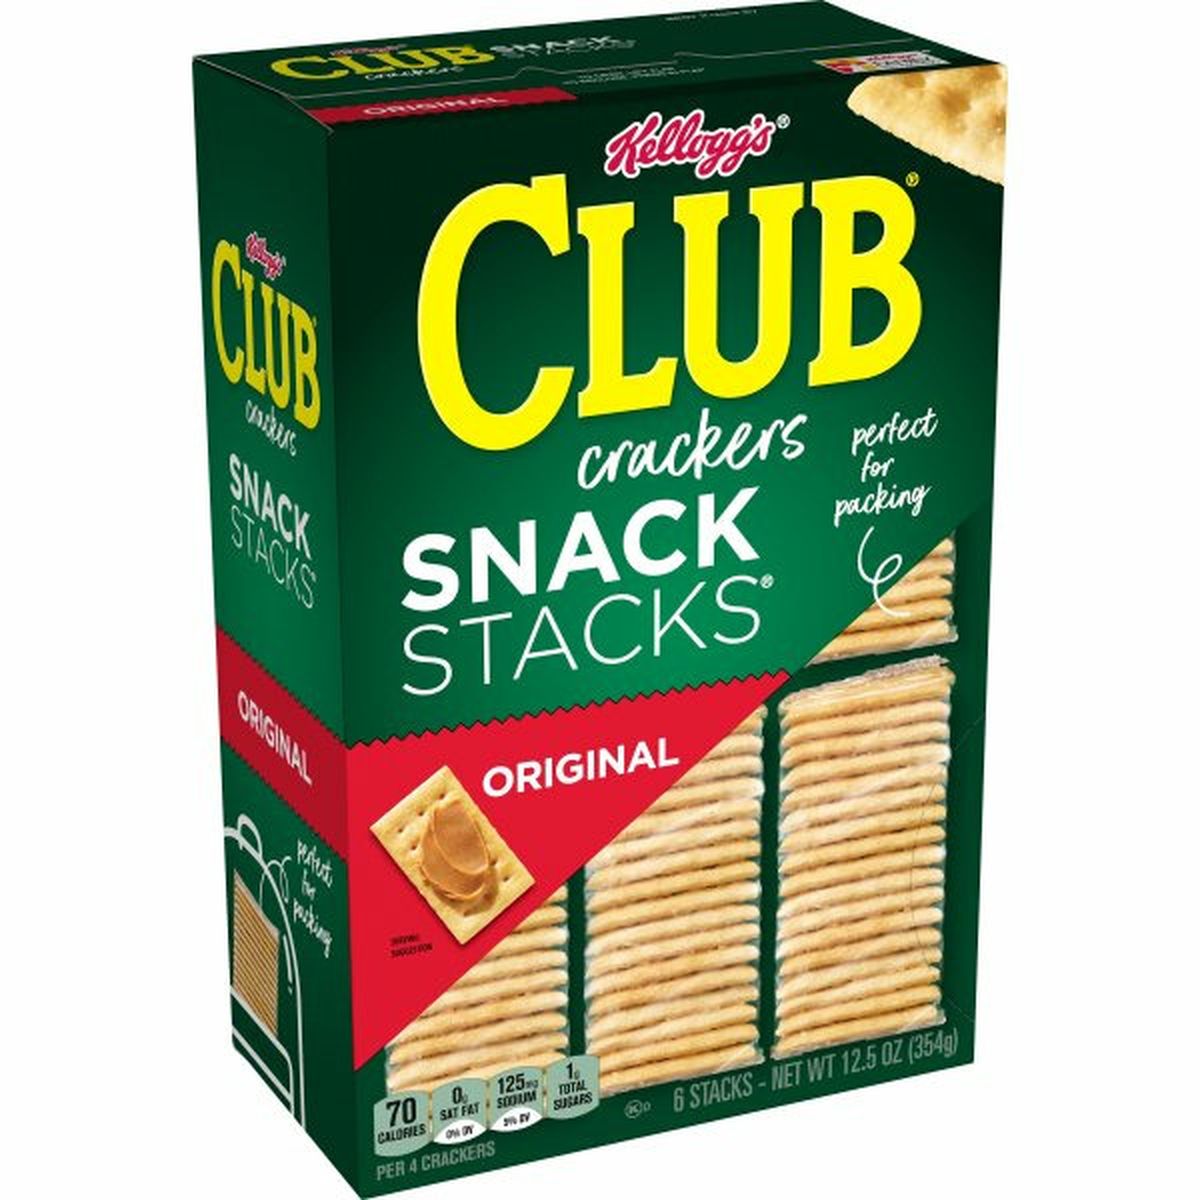 Calories in Kellogg's Club Crackers Kellogg's Club Crackers, Original, Snack Stacks, Lunch Box Snacks, 6ct 12.5oz